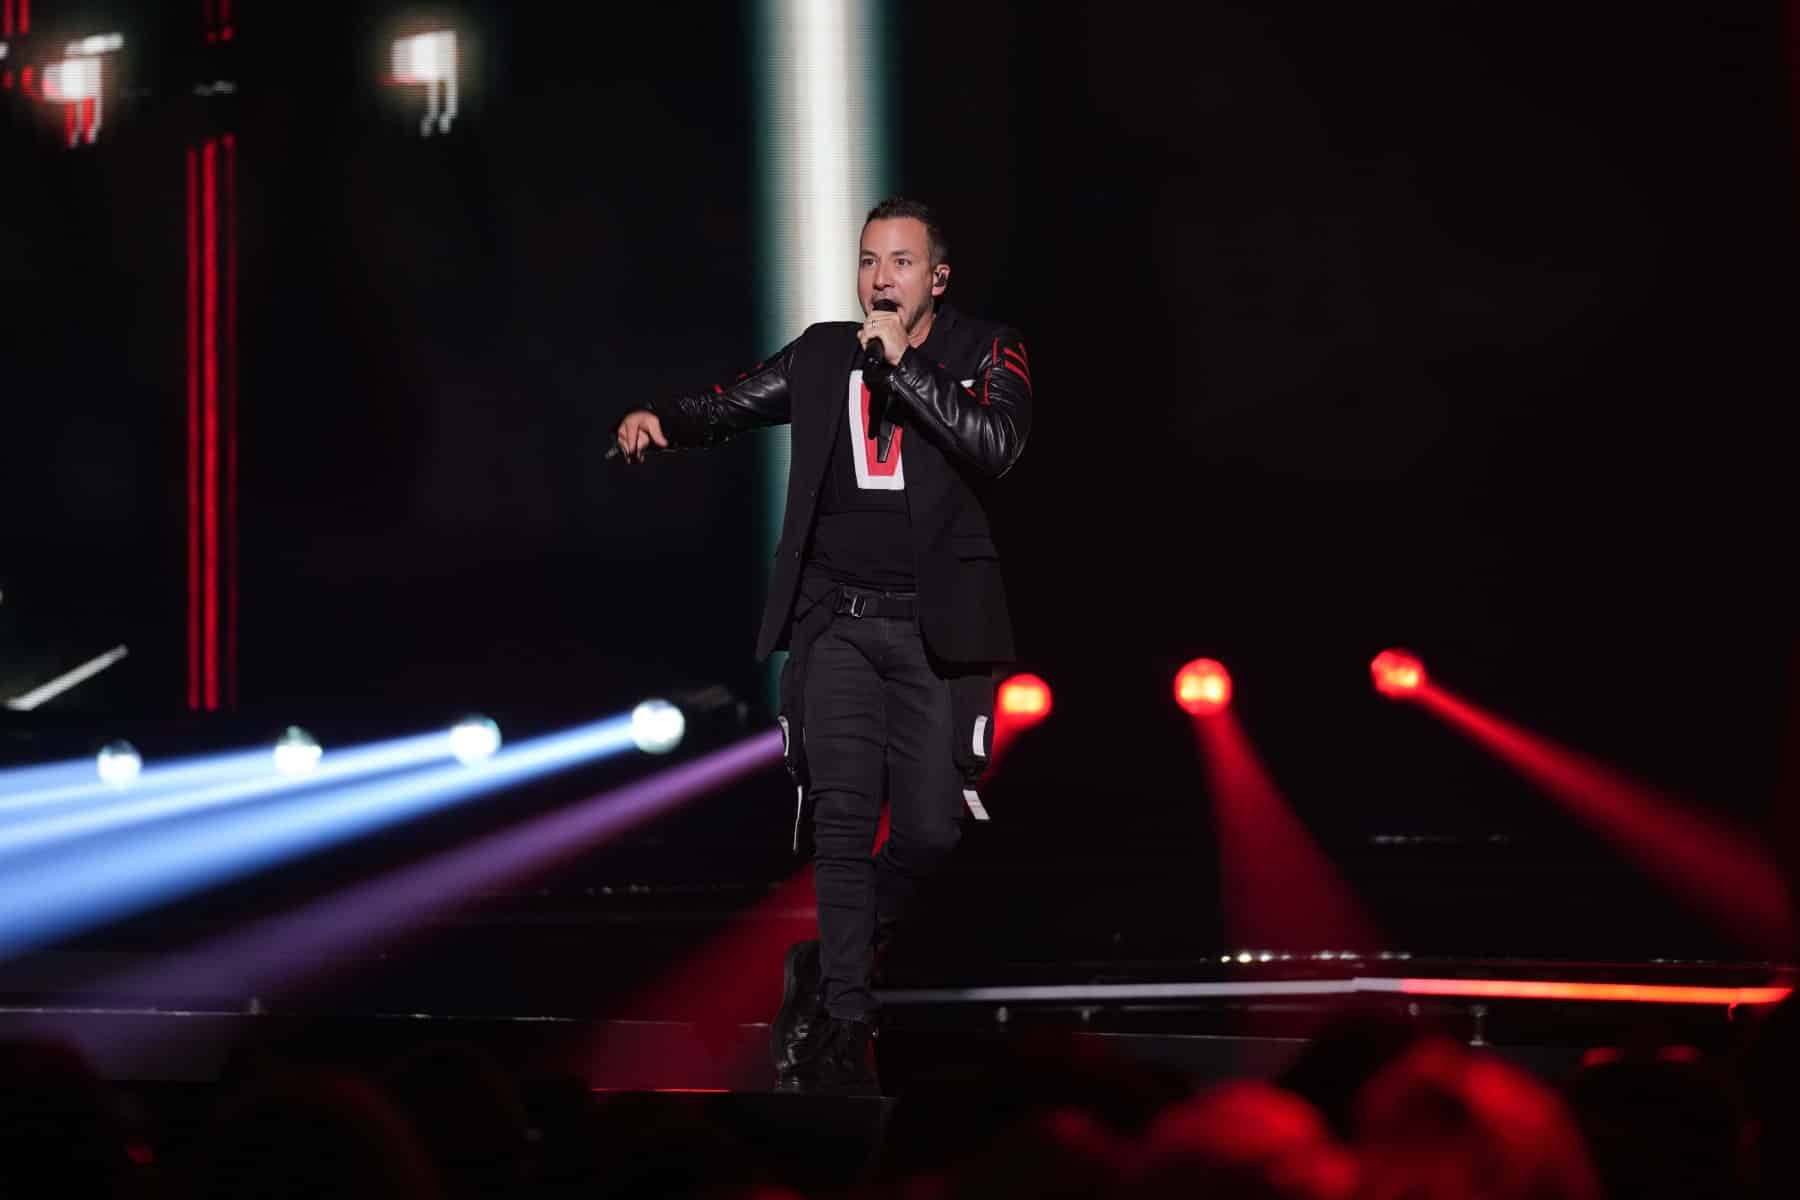 17.10.2022 Backstreet Boys DNA World Tour 2022 live in der Sap Arena Mannheim.
Fotos © by Boris Korpak/ bokopictures